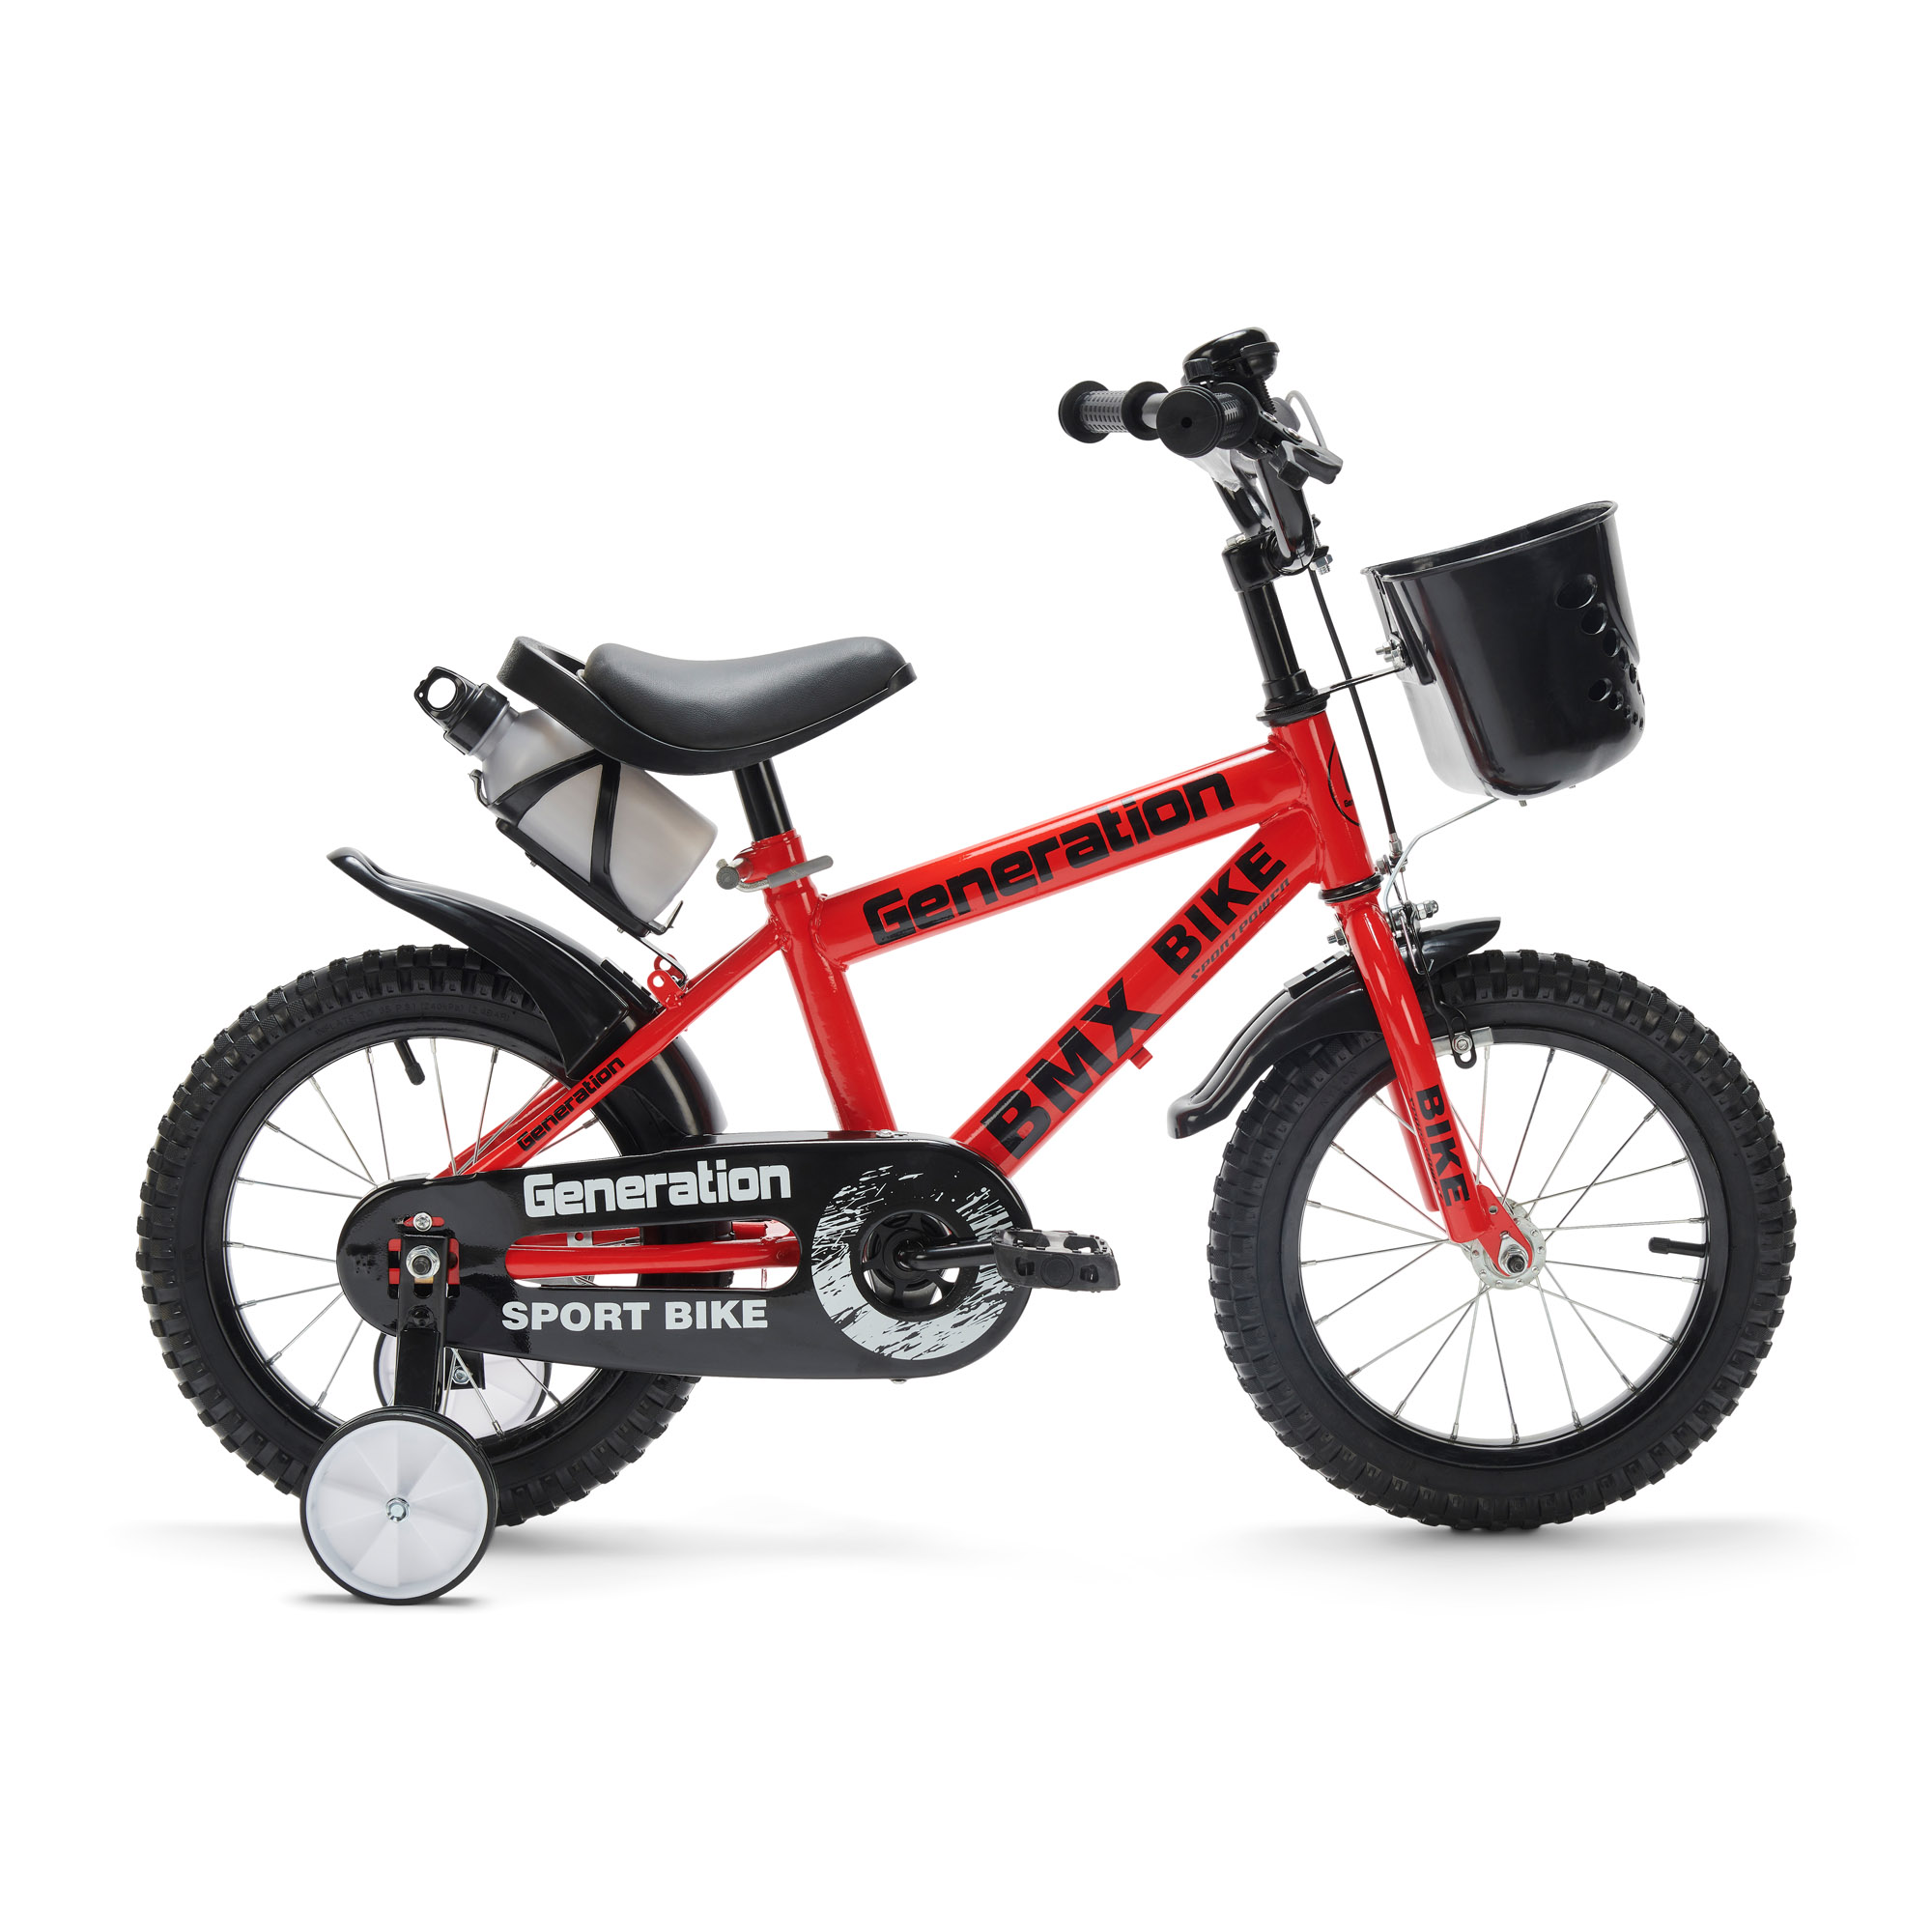 Generation BMX fiets 16 inch - Rood - Goedkope